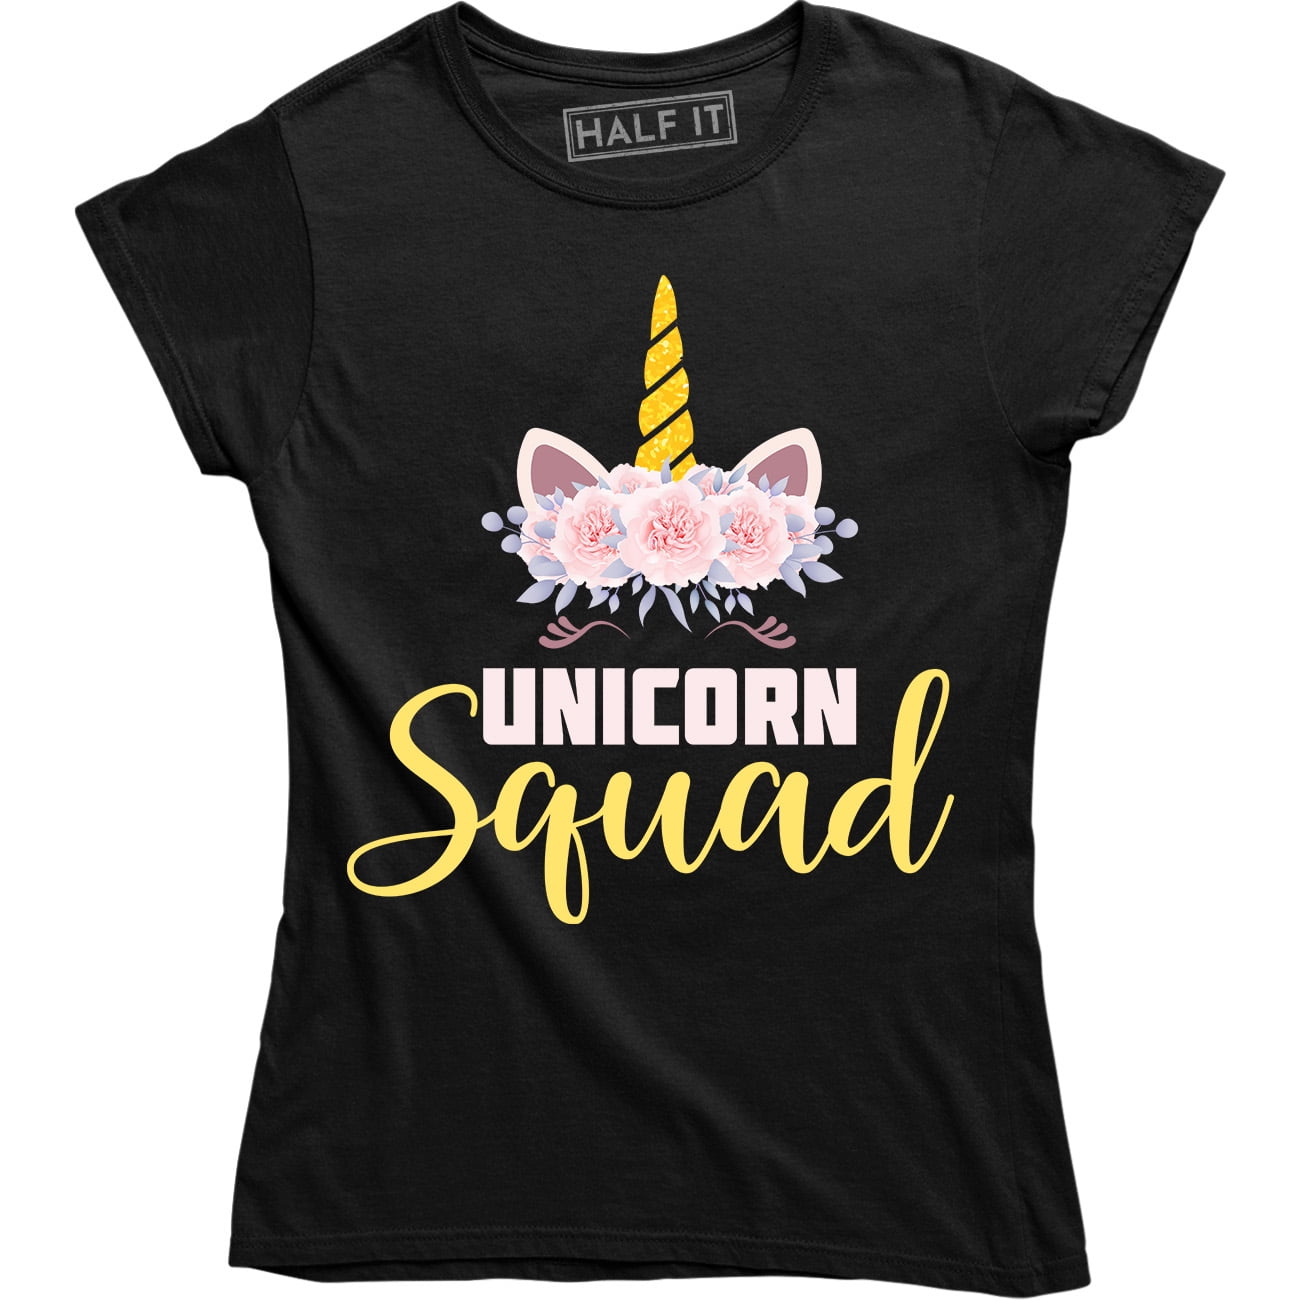 Unicorn Squad Enchanted Rainbow Fantasy Fairy Tale Women's T-Shirt